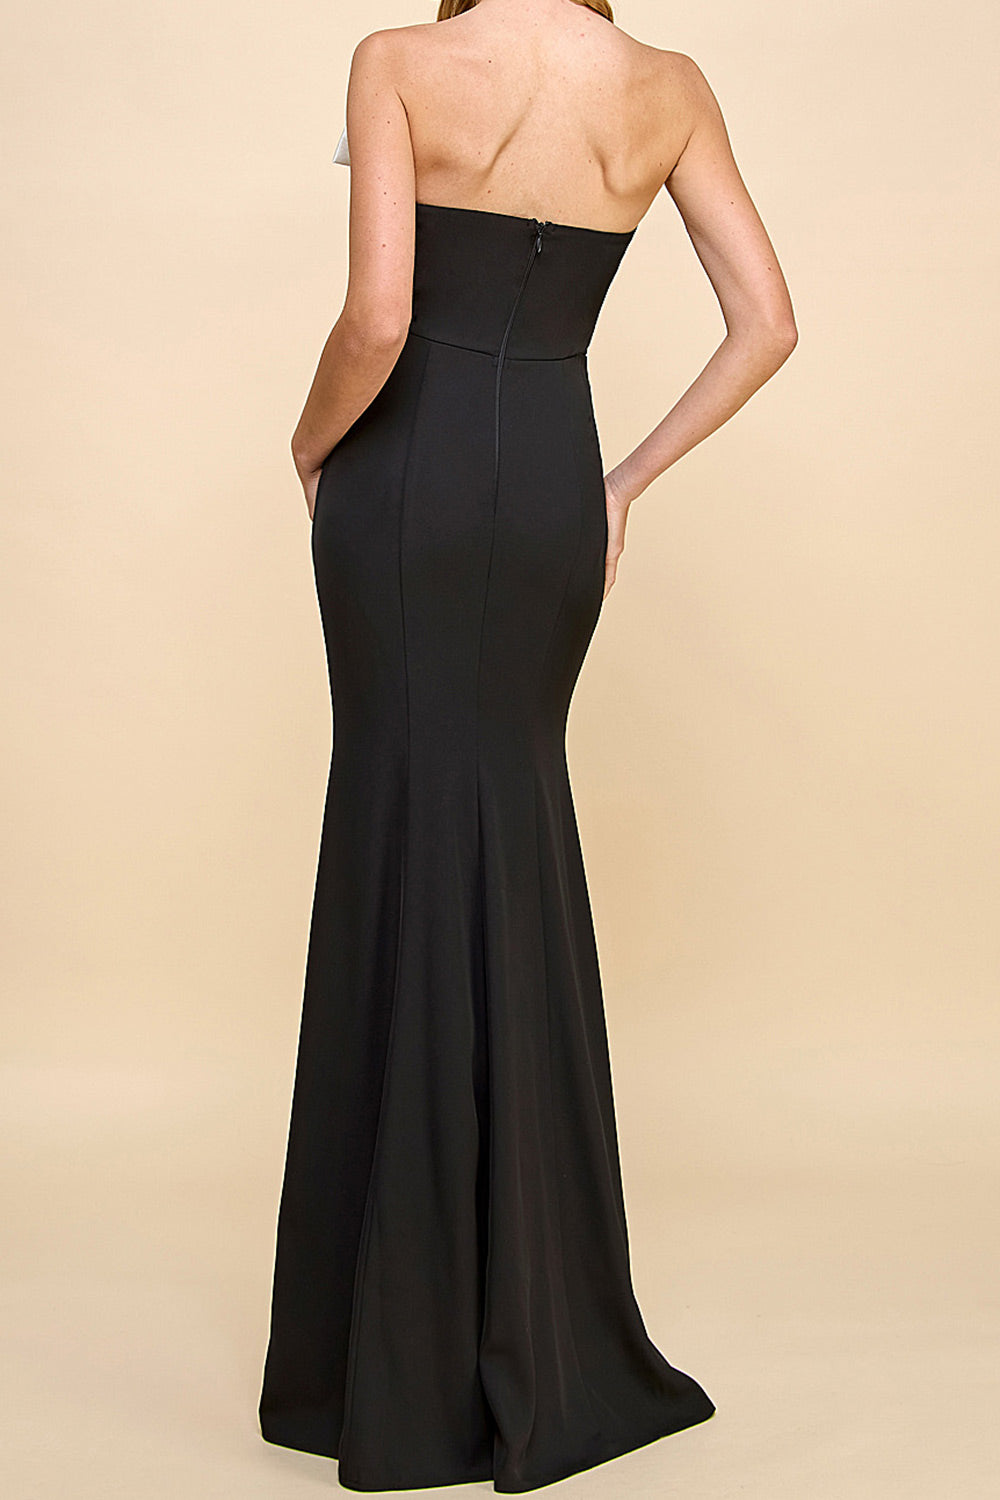 Alphys Black Mermaid Maxi Dress w/ Removable Bow | Boutique 1861 back on model